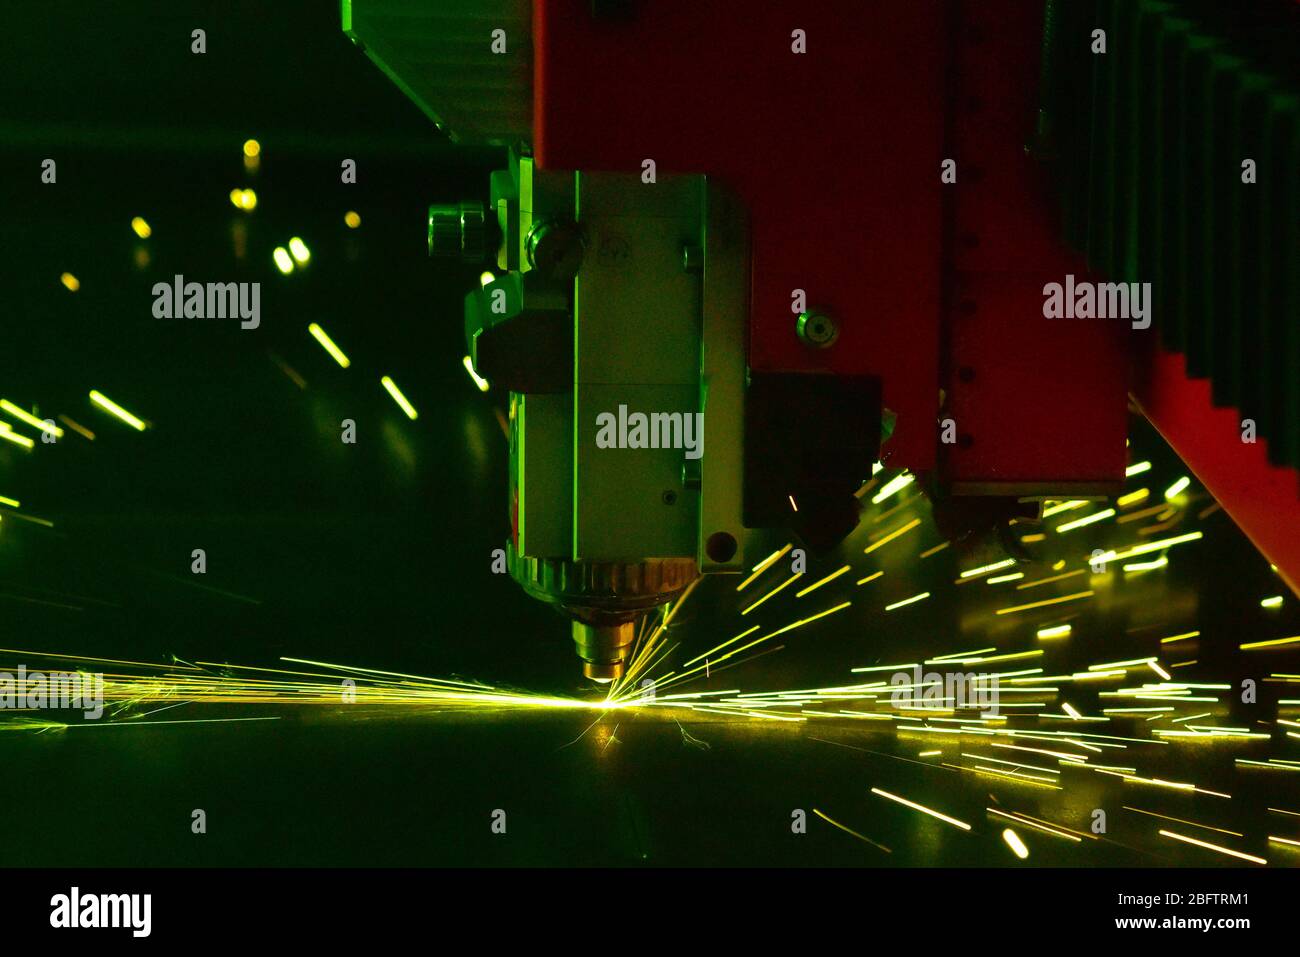 Laser cutter, sheet metal is cut with laser, sparking, Switzerland Stock Photo